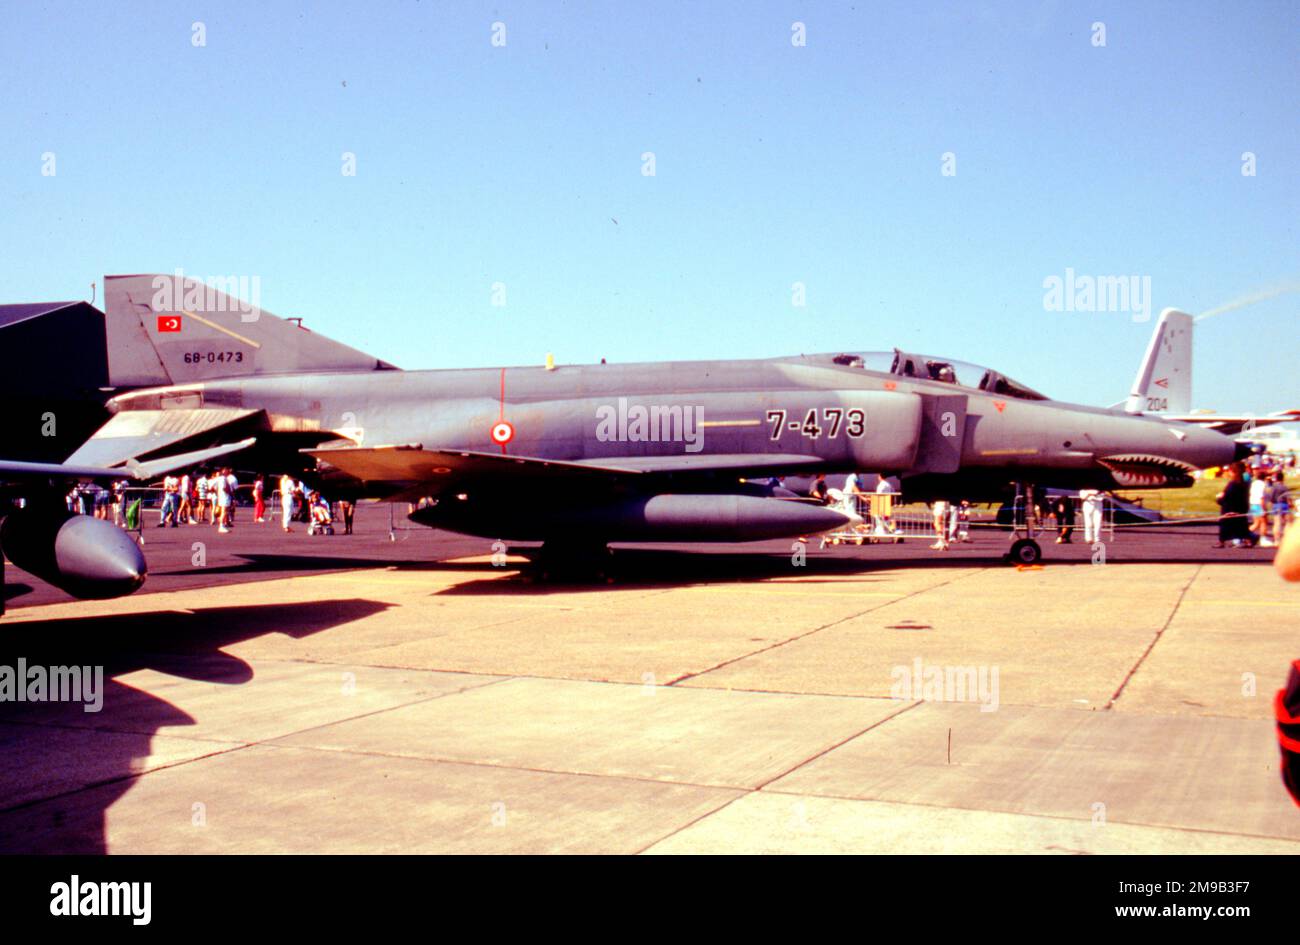 TÃ¼rk Hava Kuvvetleri - McDonnell Douglas F-4E-40-MC Phantom II 7-473 (msn 3636, ex 68-0473), a Boscombe giù il 13 giugno 1992 per il Torneo aereo Internazionale. (TÃ¼rk Hava Kuvvetleri - Aeronautica Turca) Foto Stock